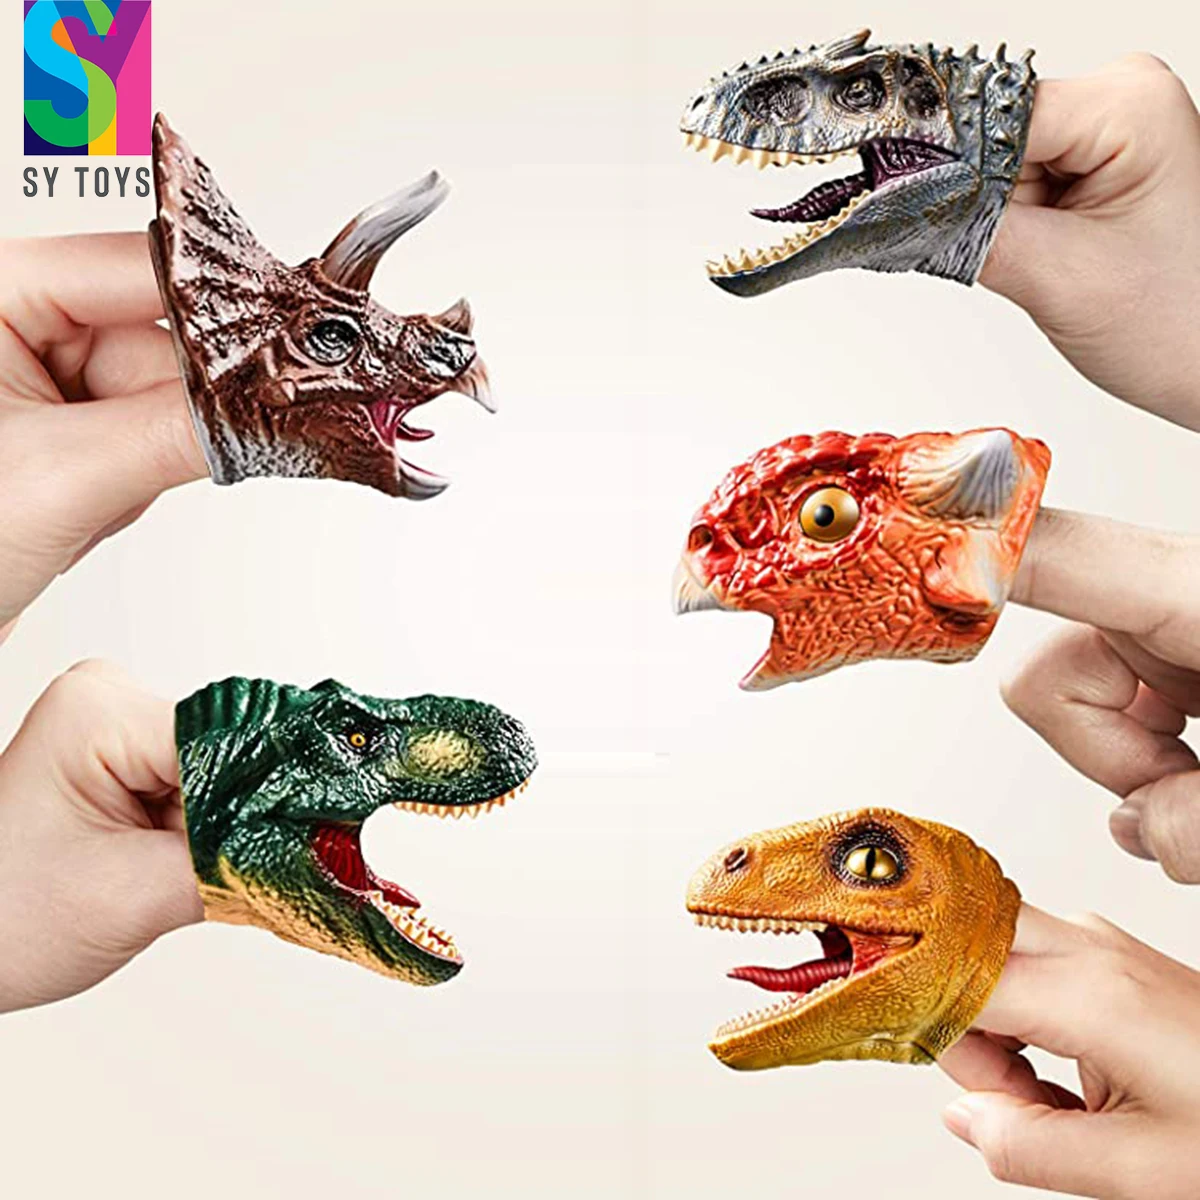 2xbiting doigt dinosaure jouet avec articulations flexibles